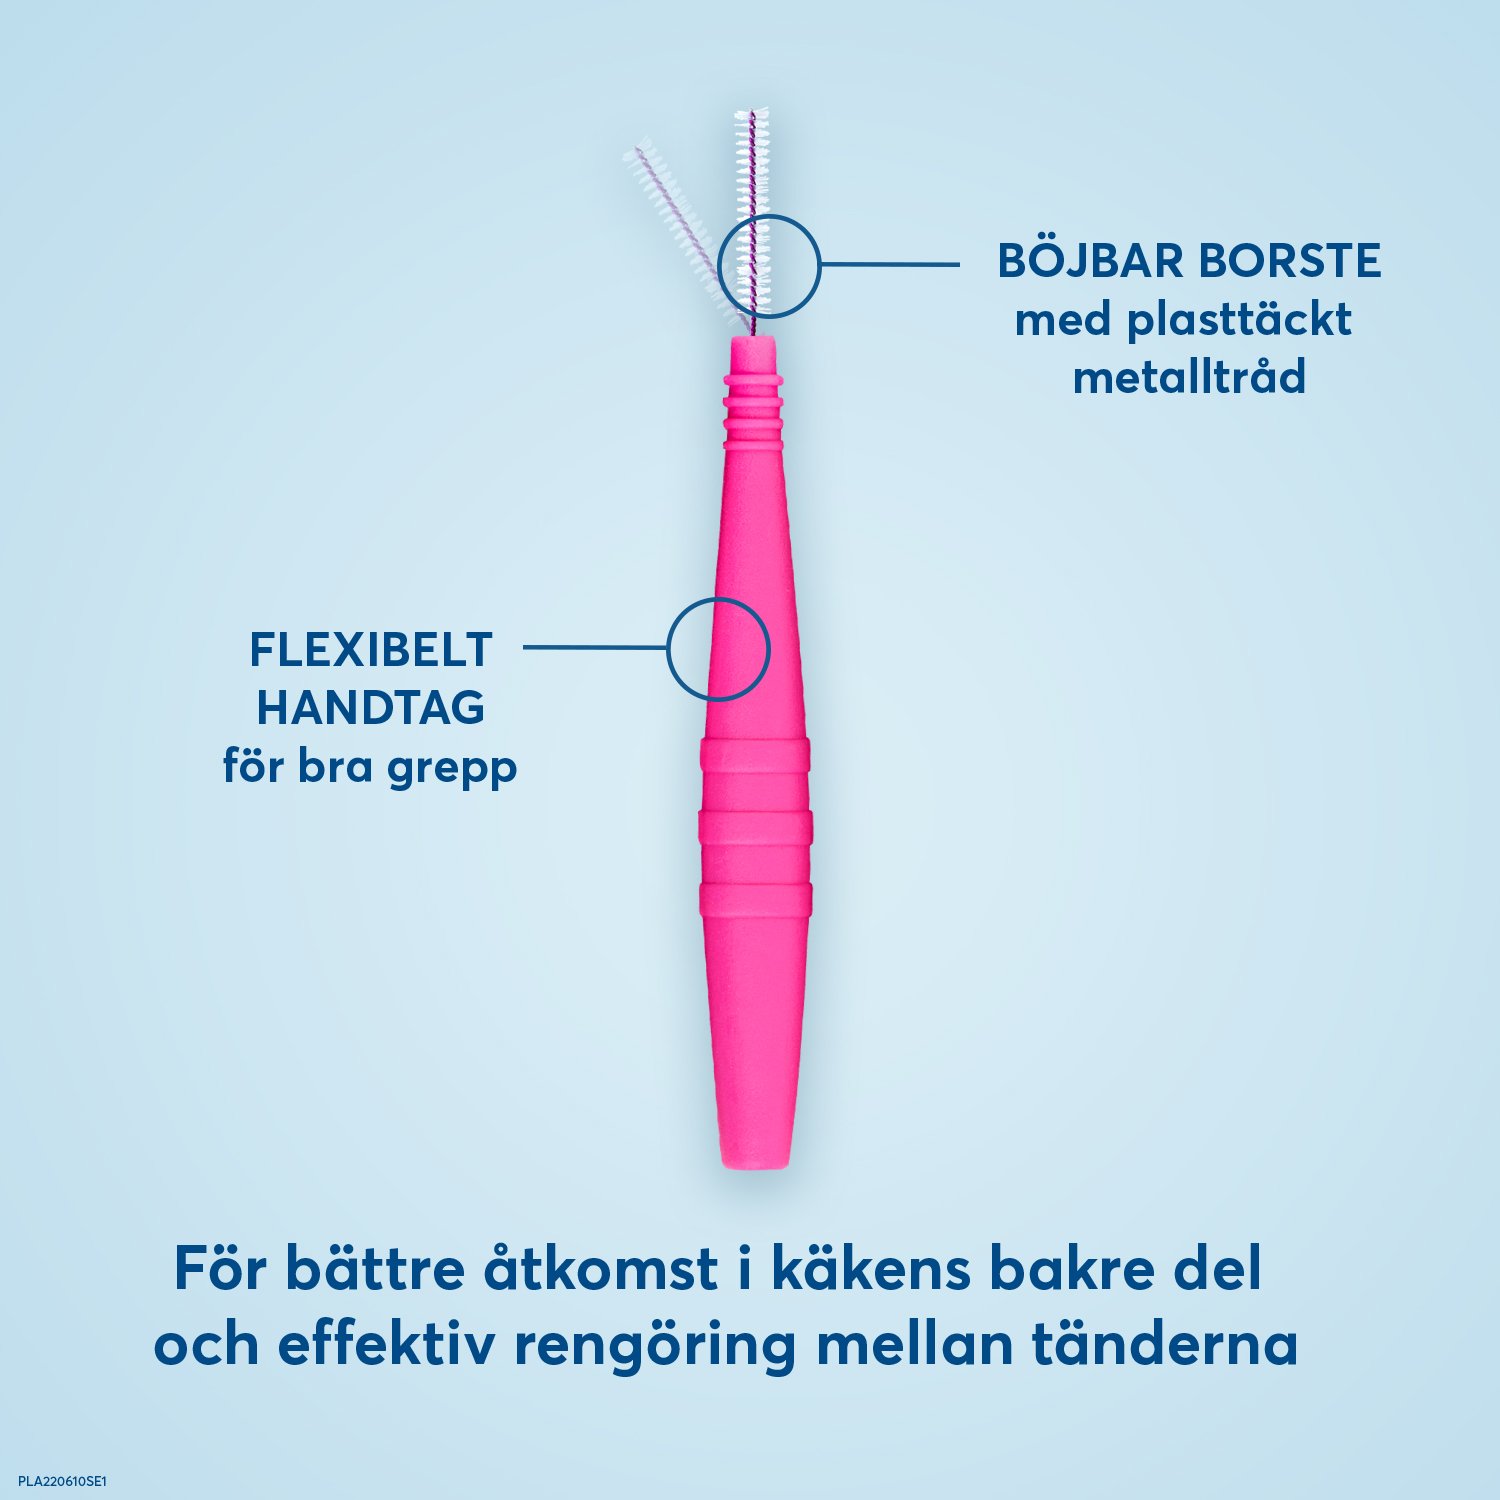 Plackers Dental Brush Mellanrumsborste Rosa XS (0,4 mm) 24 st